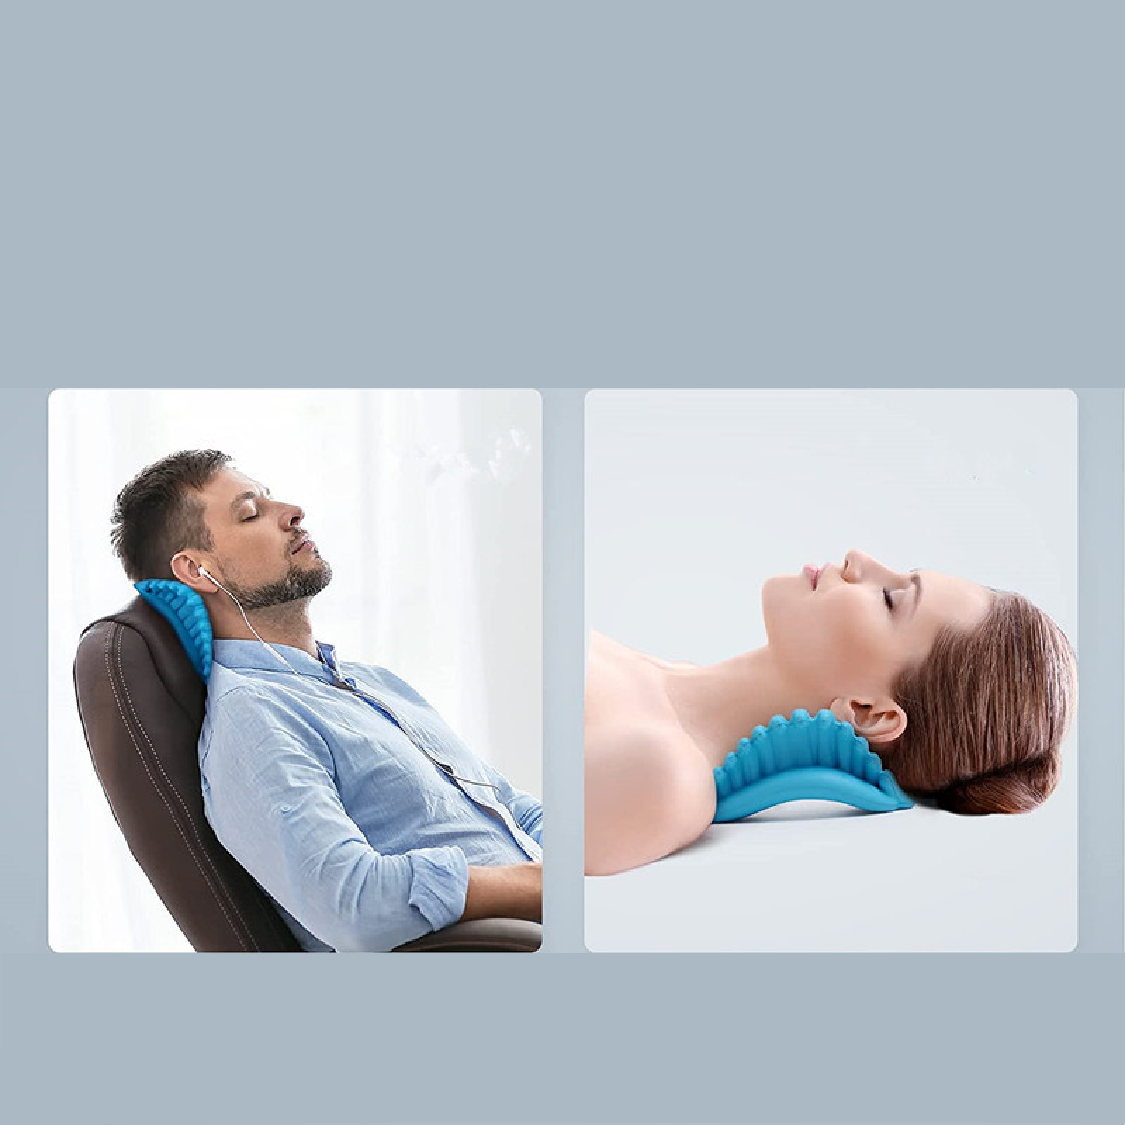 Popular PU foam neck traction pillow Pain relief cervical massage pillow Self-skinning rich bag correction pillow